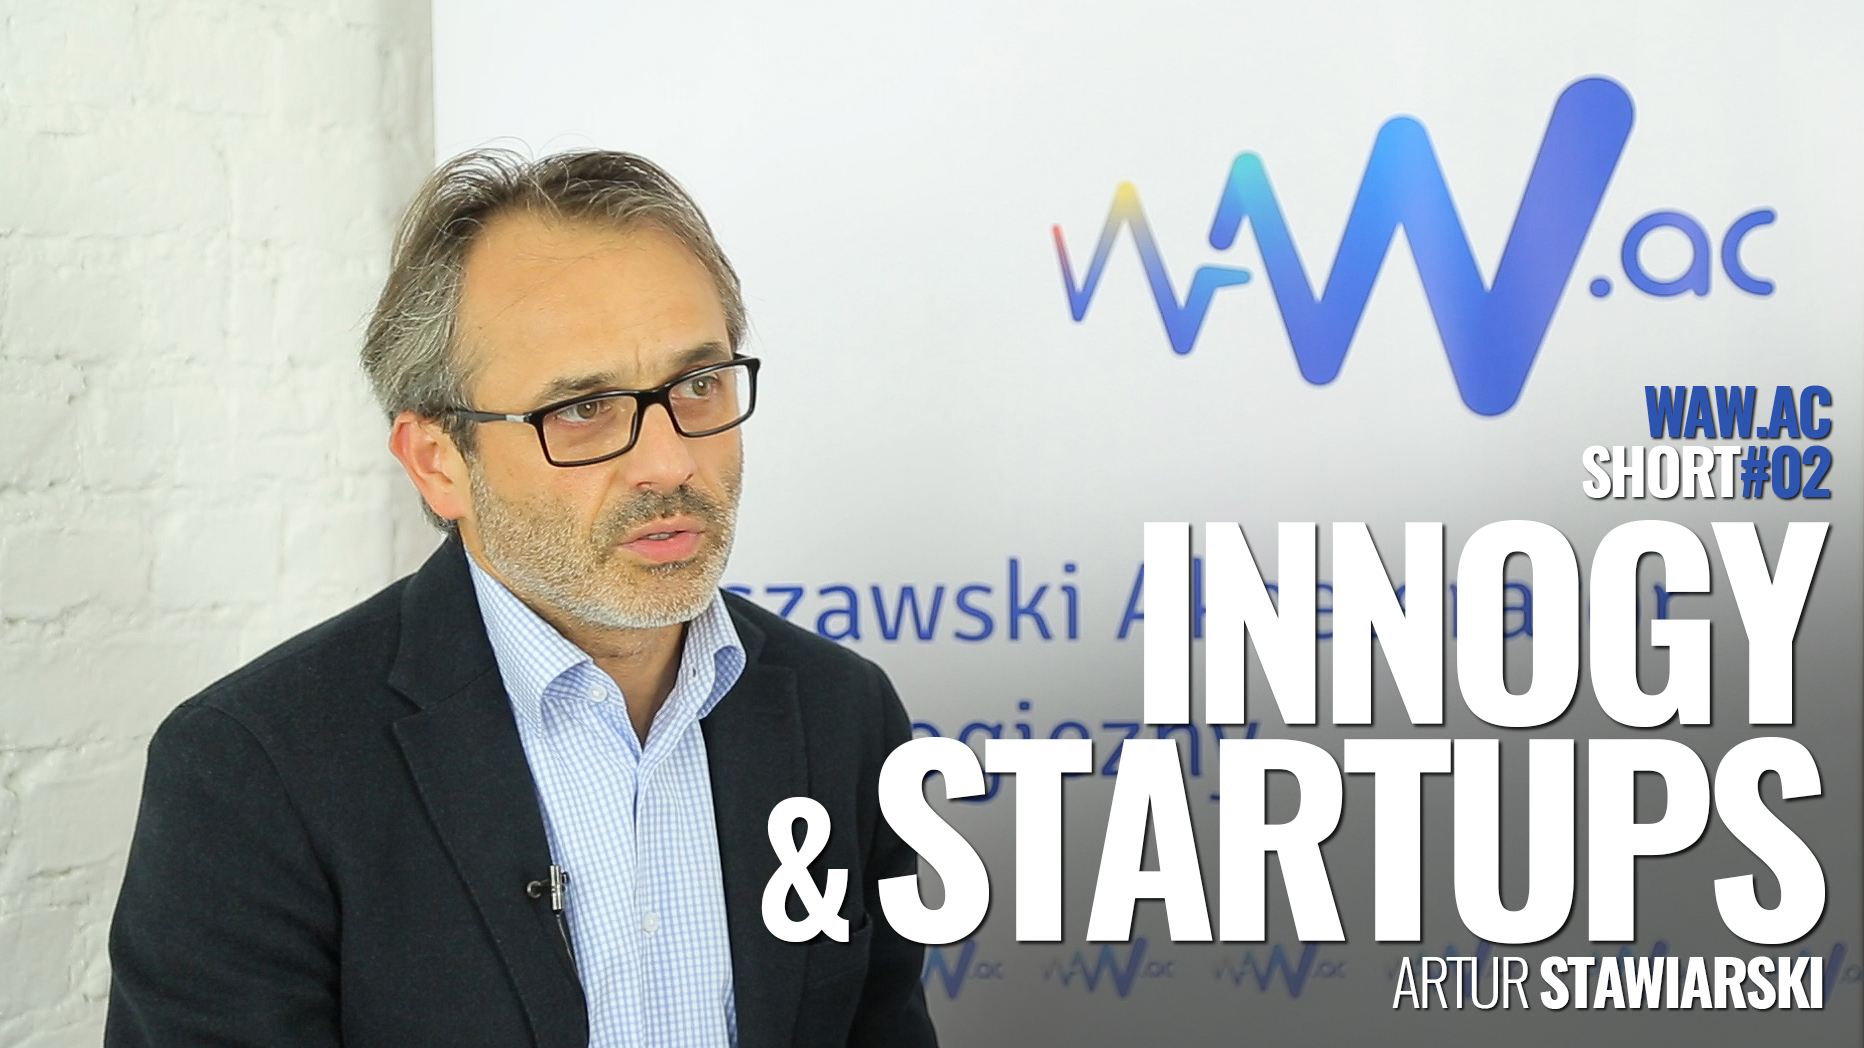 WAW.ac Short #02 – innogy&startups